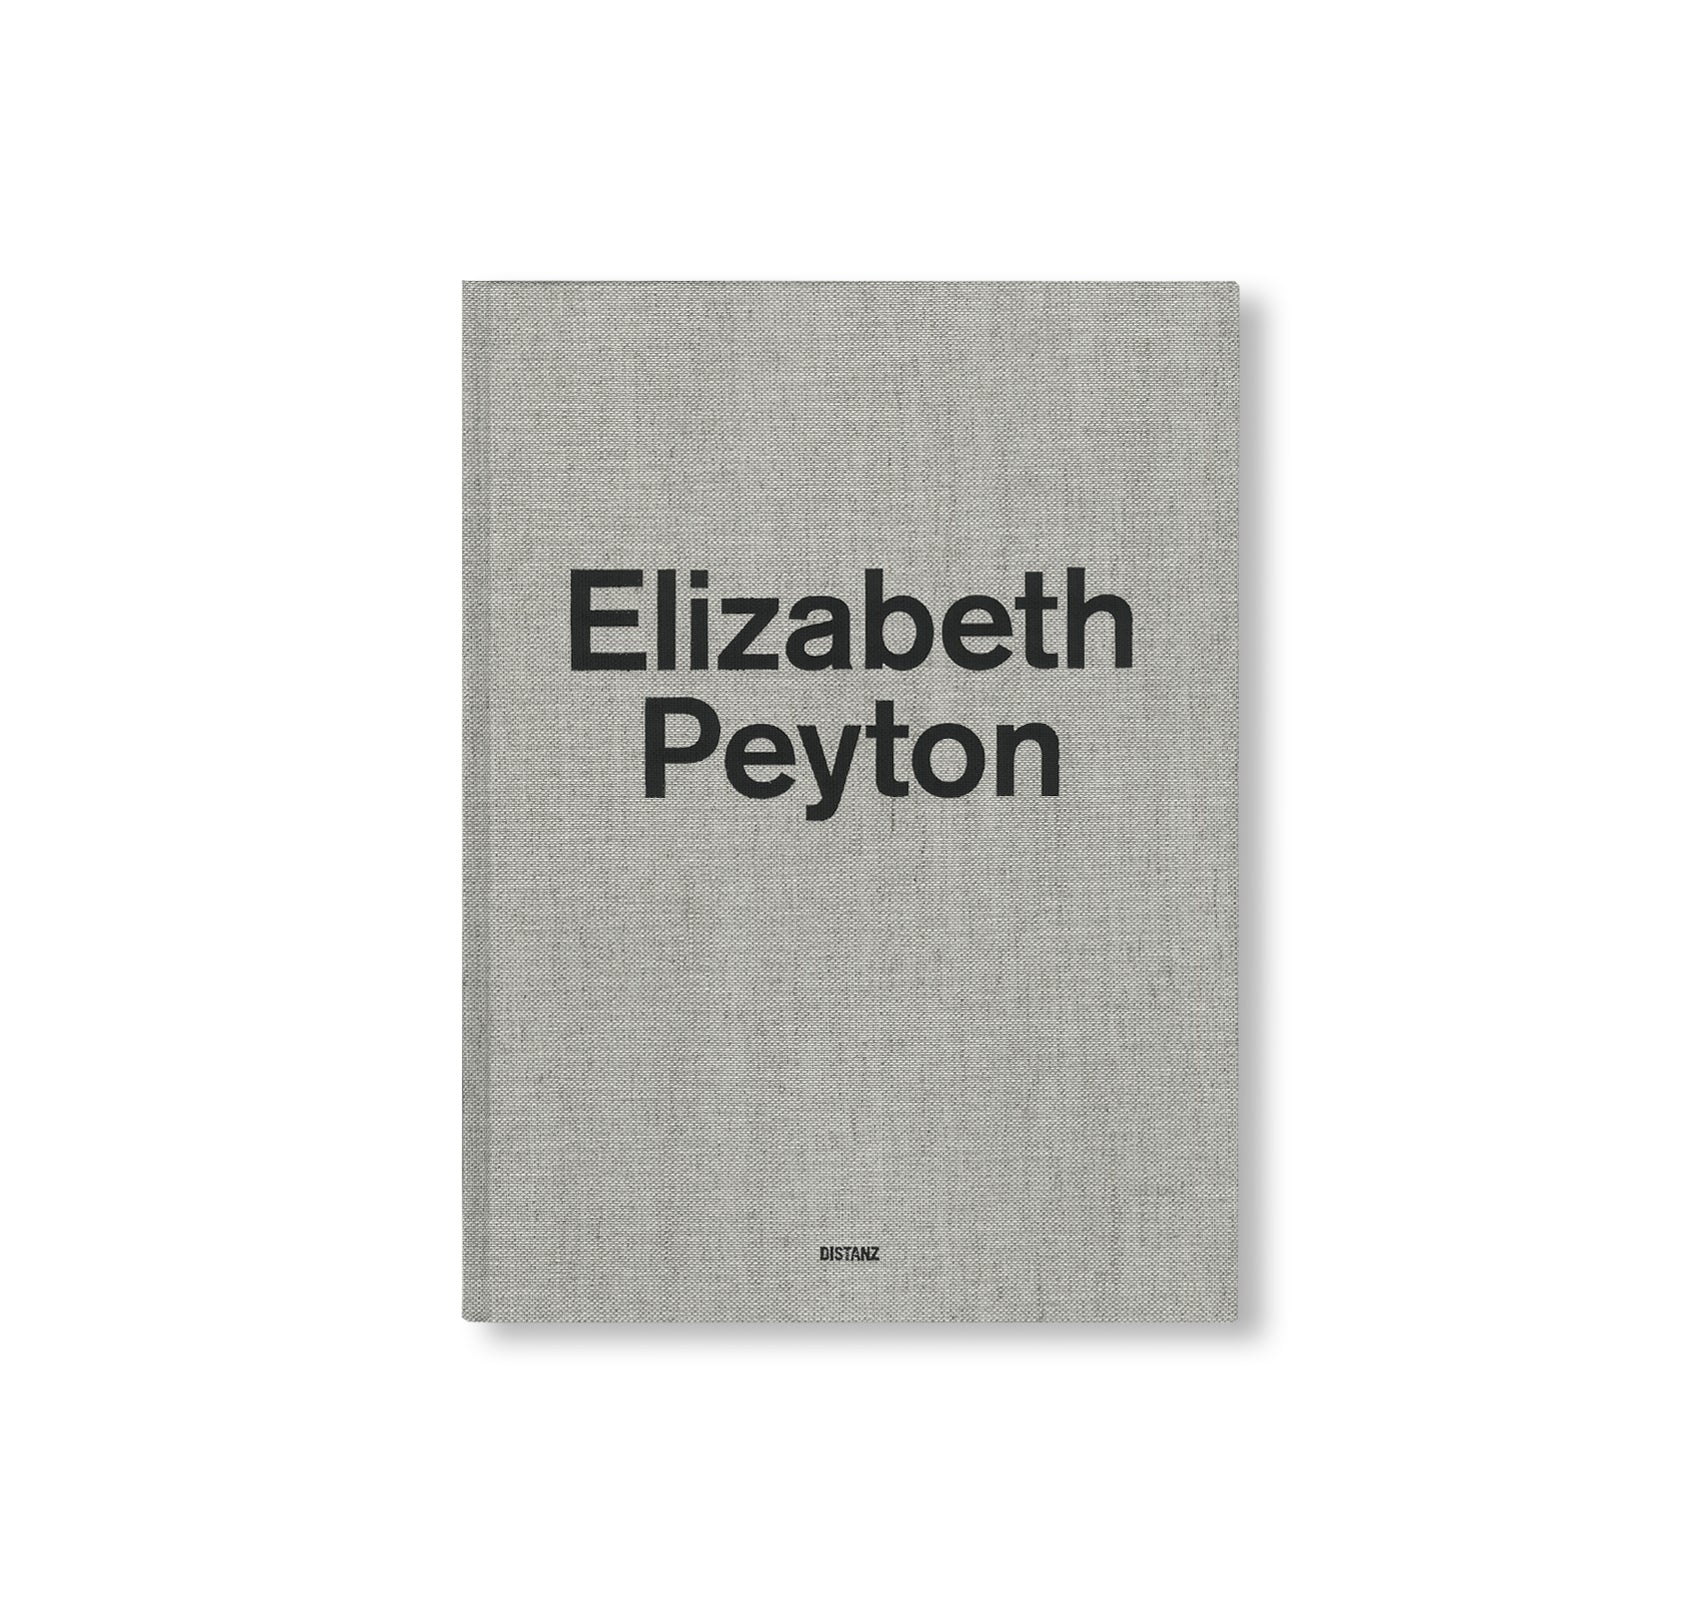 ELIZABETH PEYTON by Elizabeth Peyton